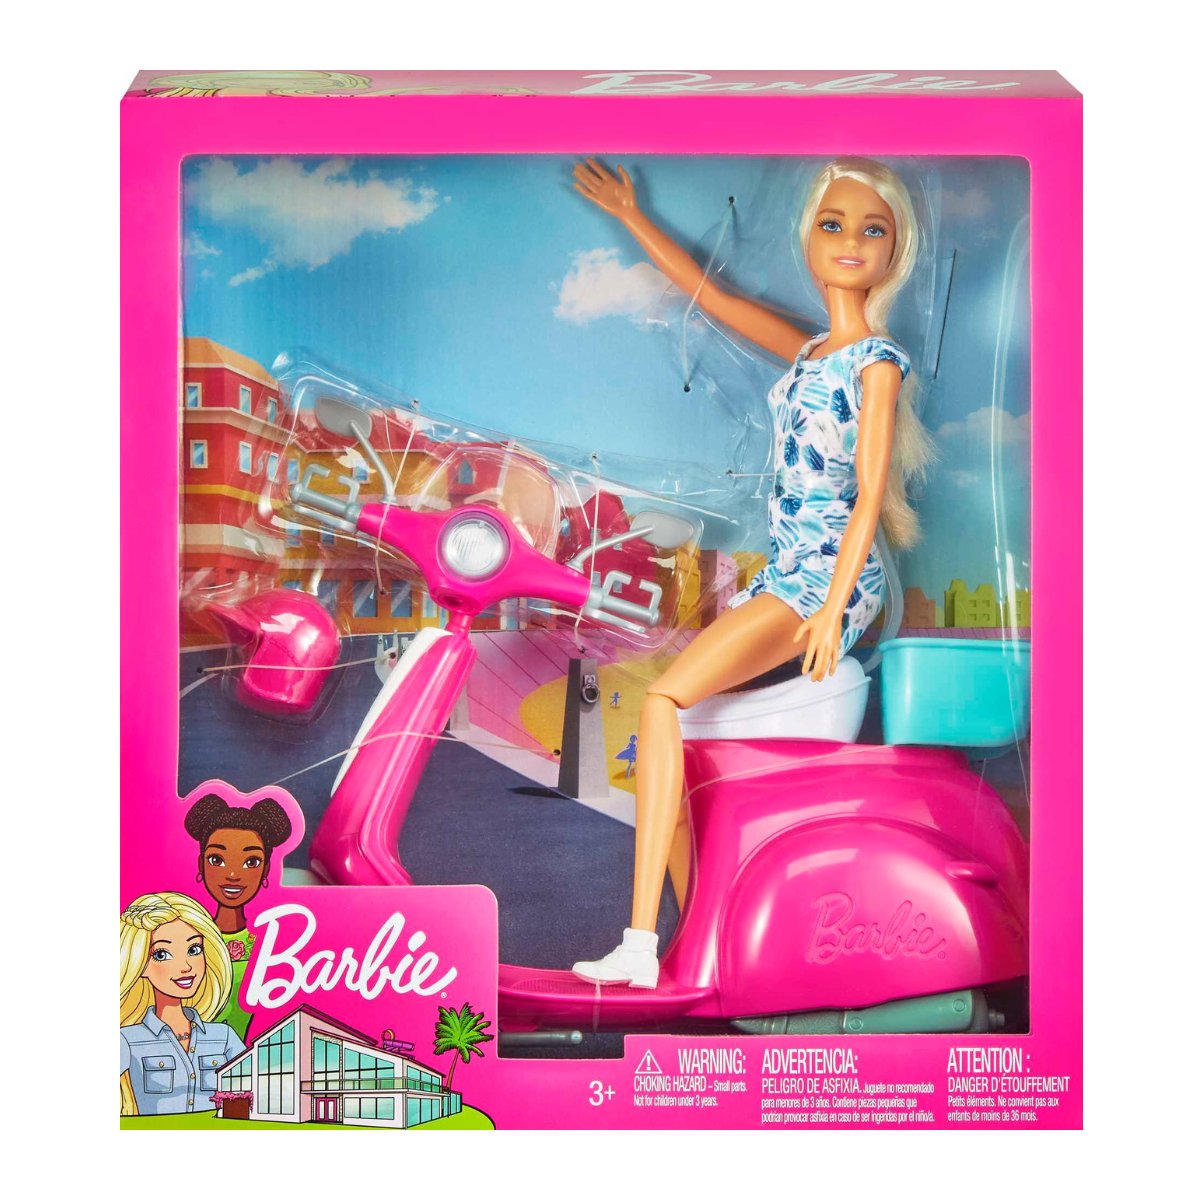 Barbie &amp; Scooter Bike